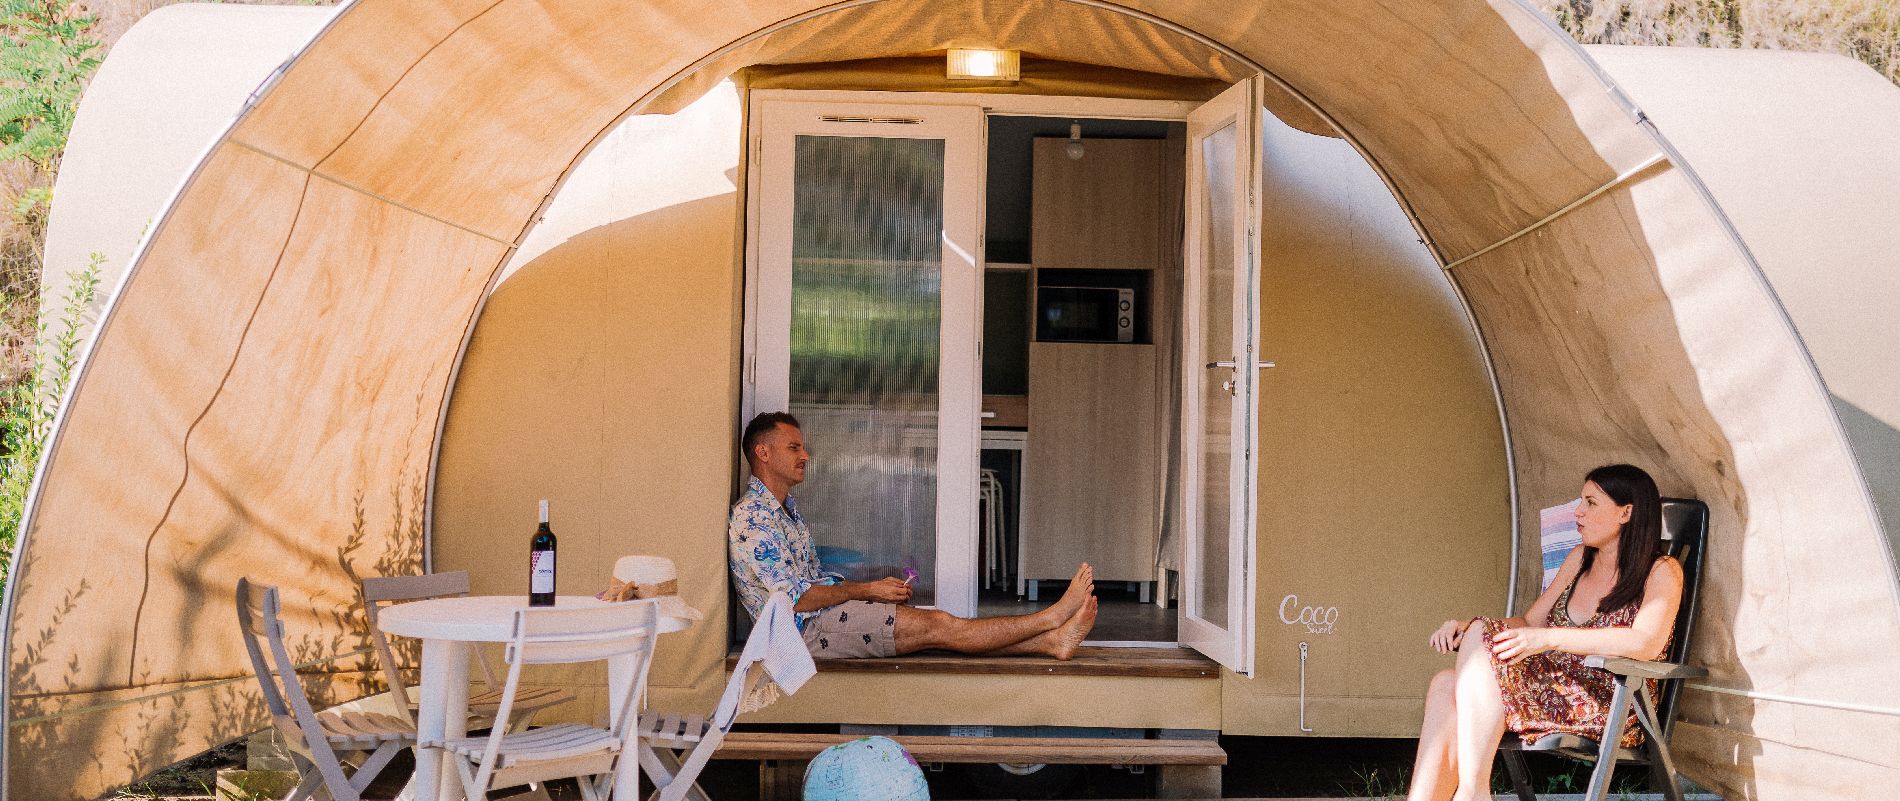 Camping Cala Gogo-Coco Sweet aufgebautes Zelt für 4 Pers.